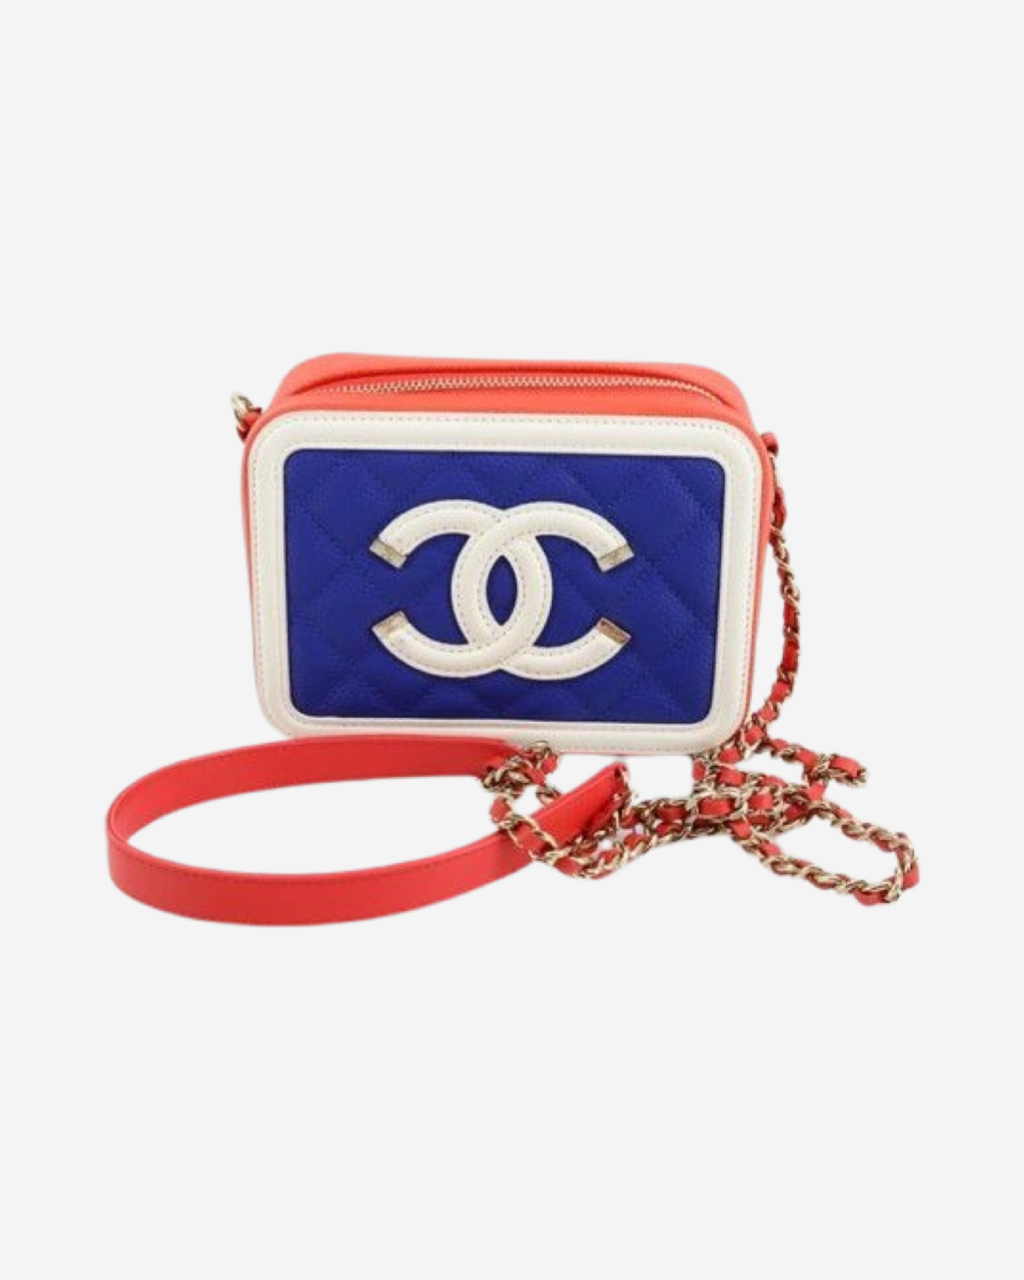 Chanel CC Feligree Bag (MISSING RETAIL PRICE)